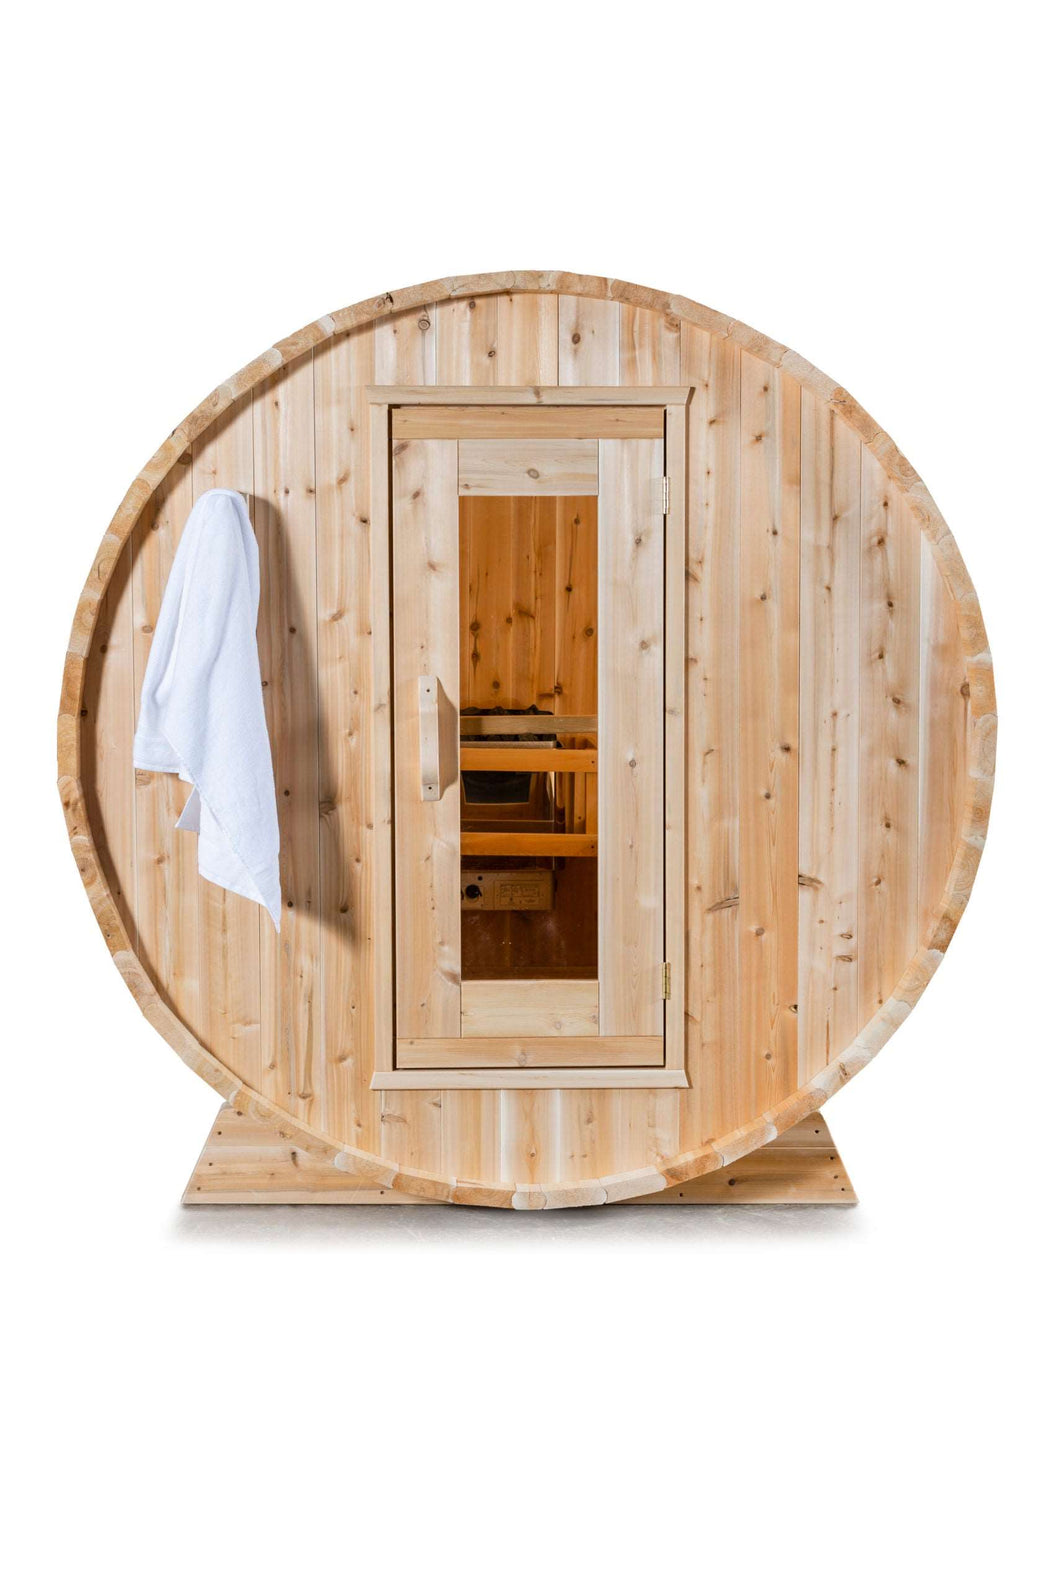 Dundalk Leisurecraft Canadian Timber Harmony CTC22W Traditional Outdoor Barrel Sauna